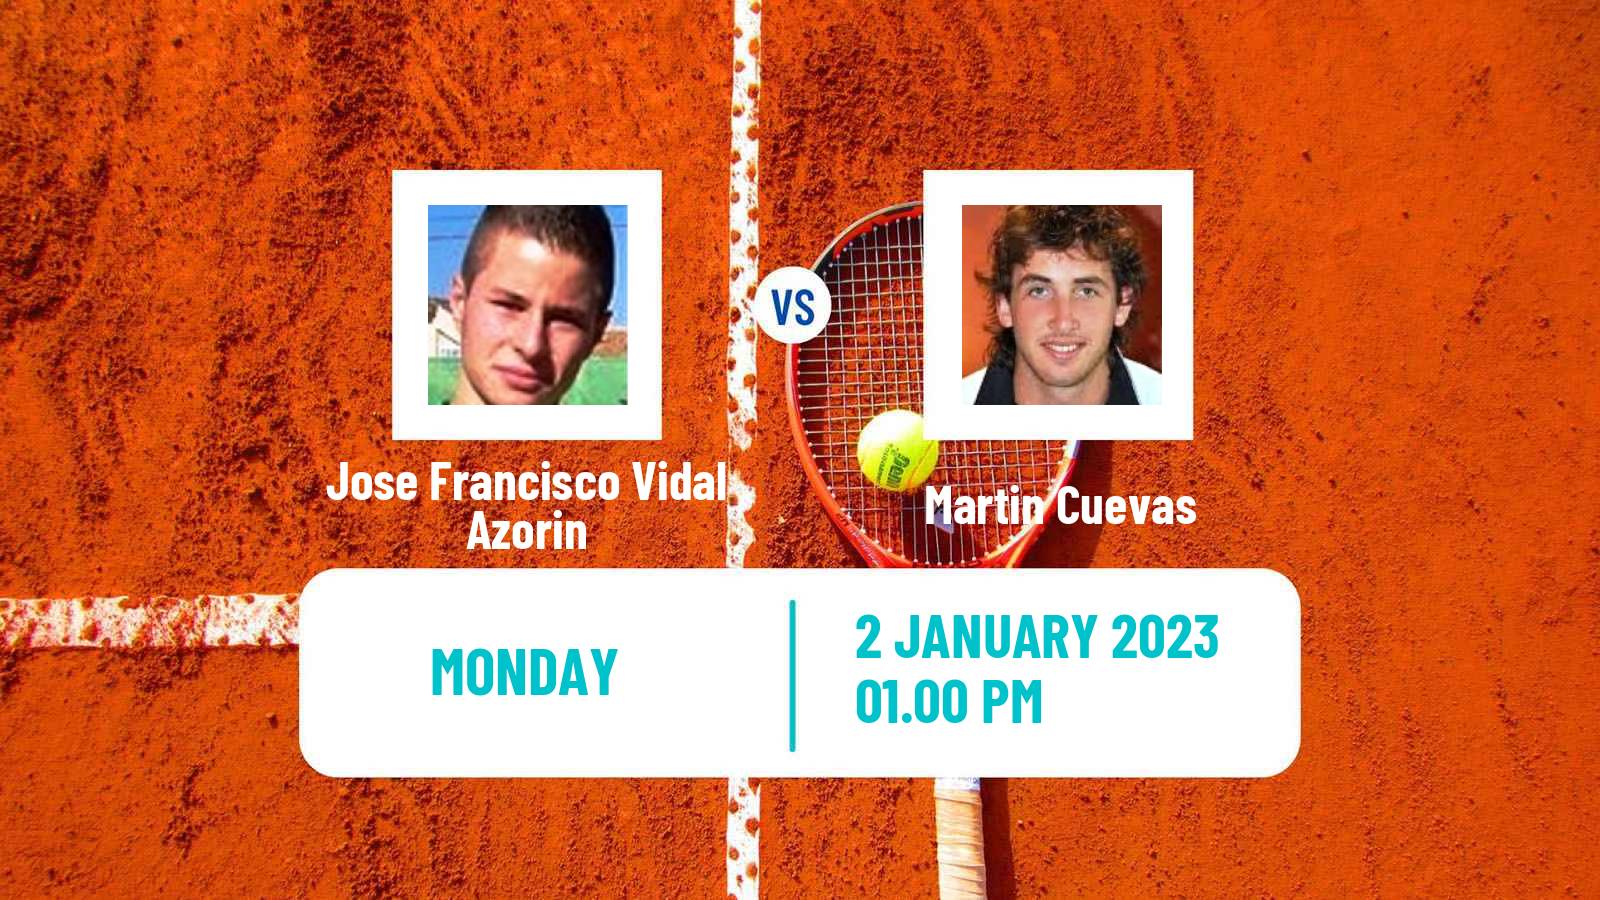 Tennis ATP Challenger Jose Francisco Vidal Azorin - Martin Cuevas